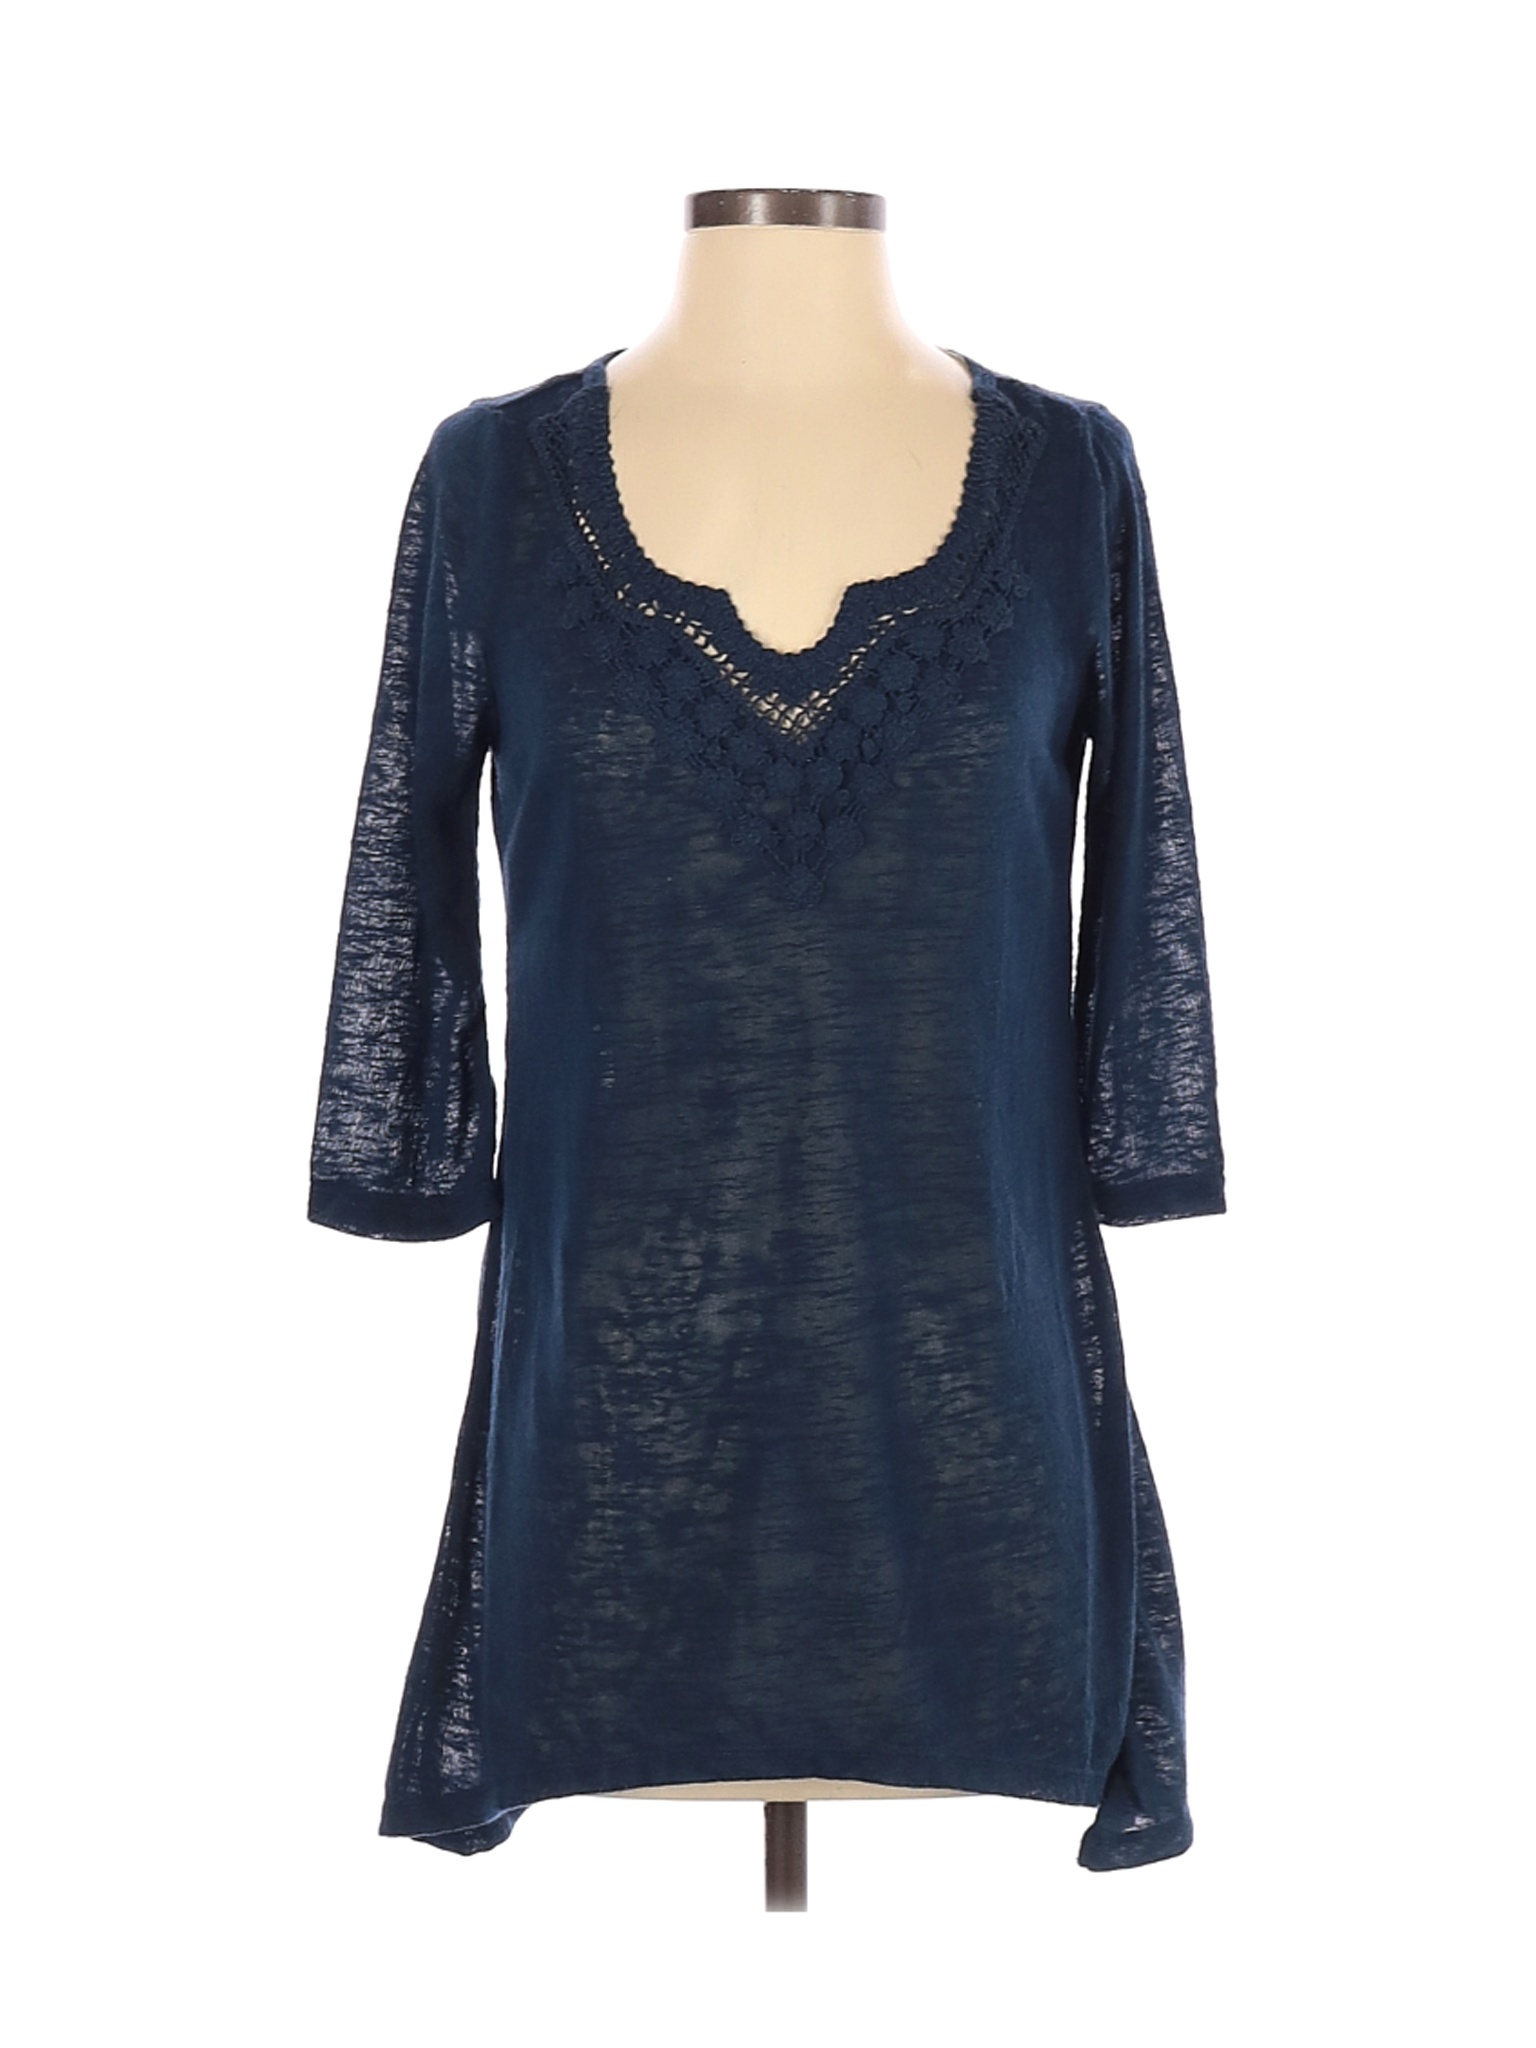 NWT French Laundry Women Blue 3/4 Sleeve Top S | eBay